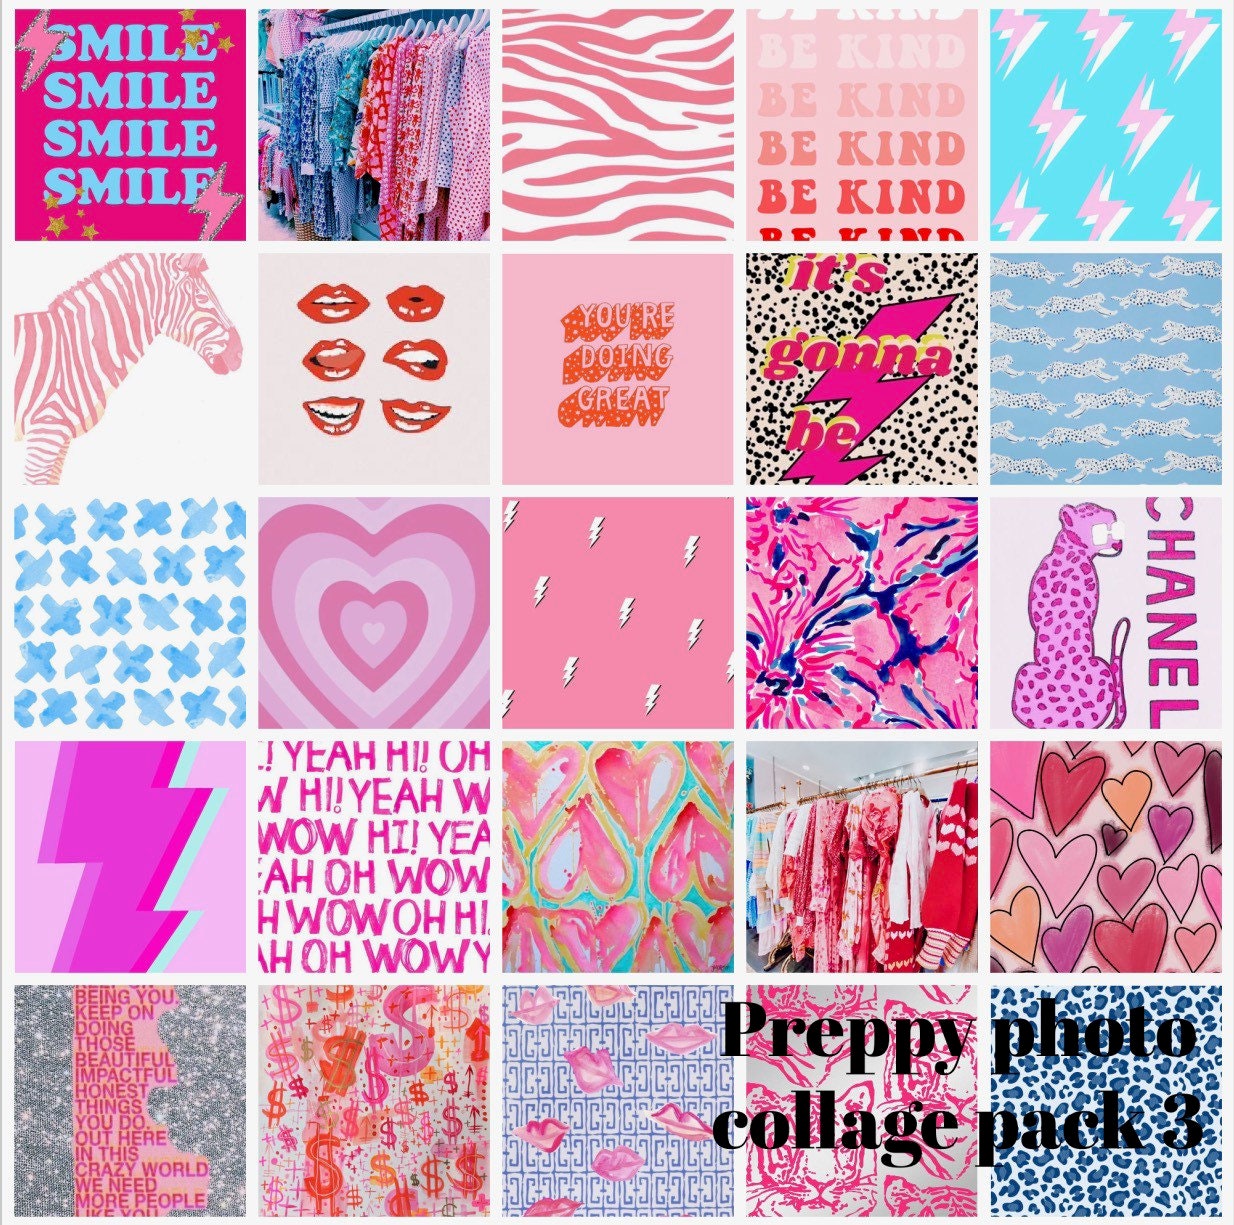 Preppy Collage Wallpaper